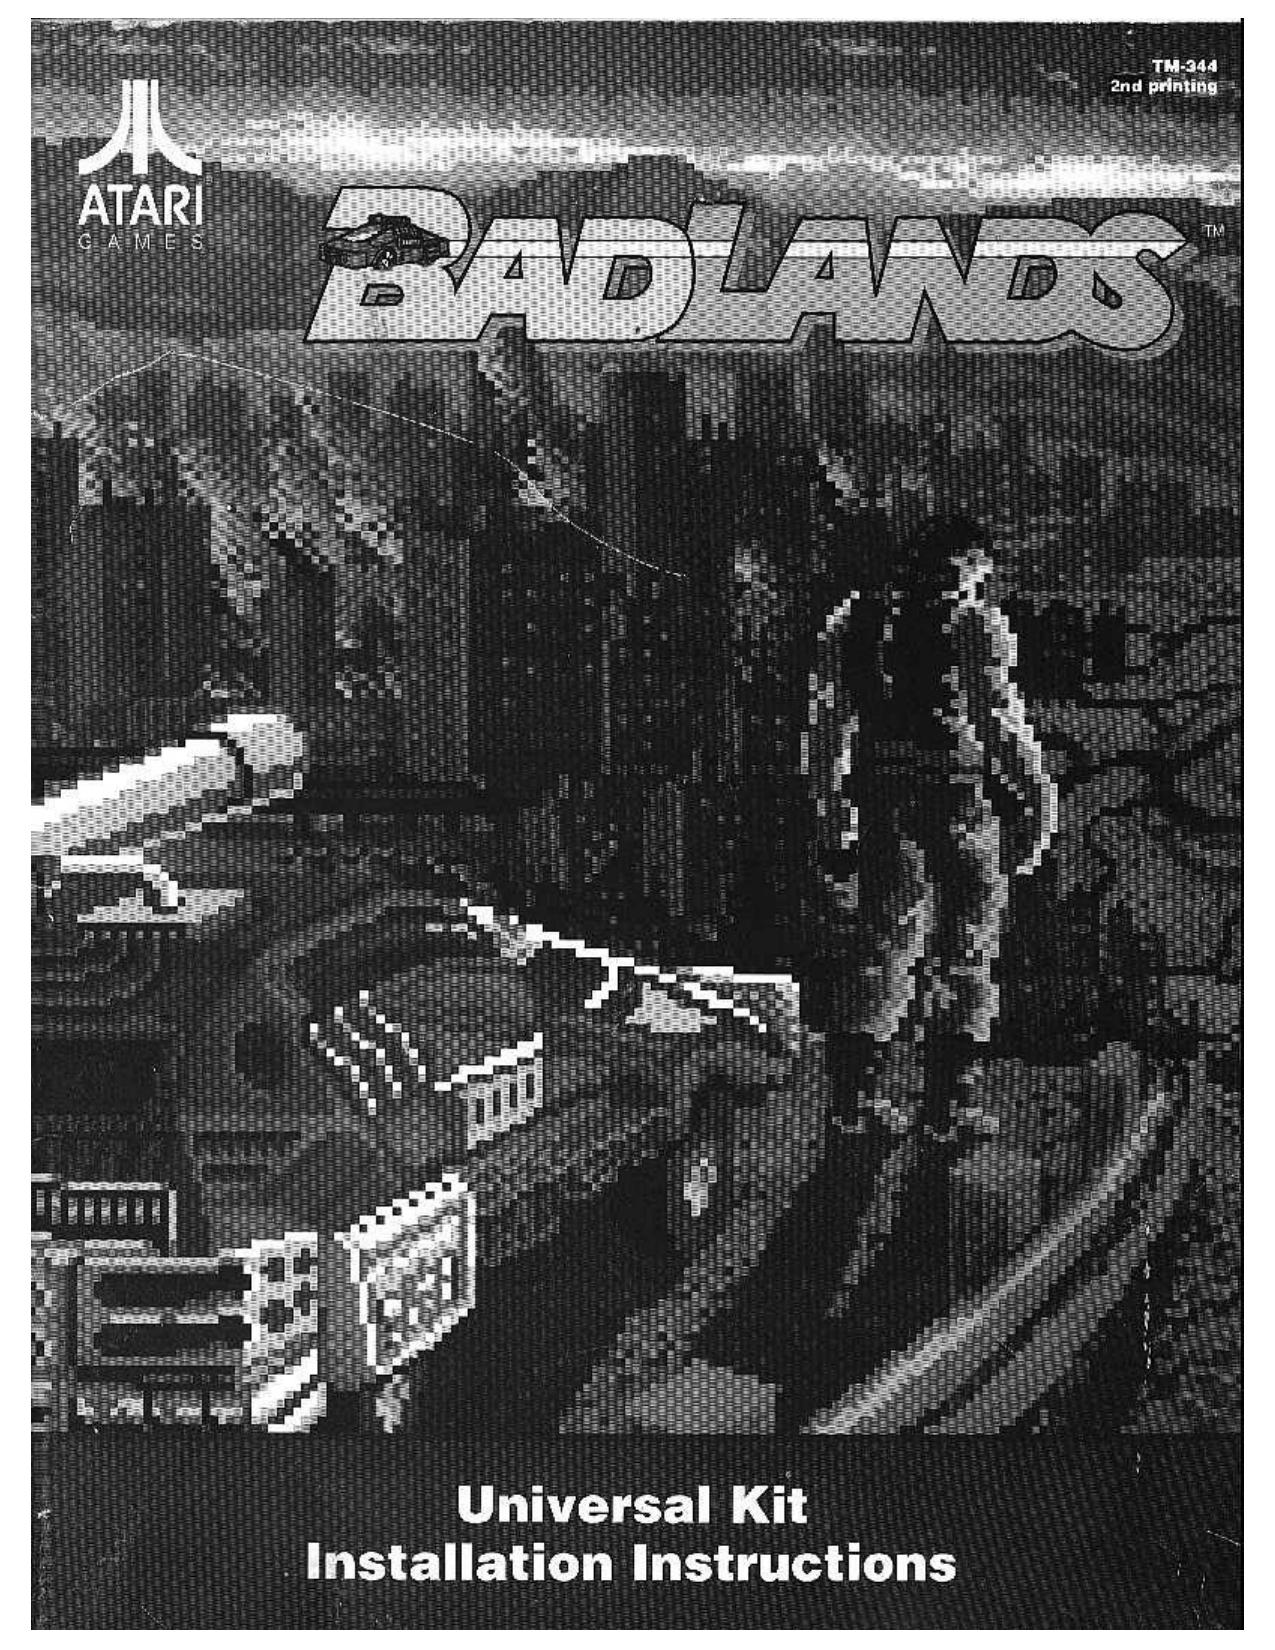 Badlands (Universal Kit TM-344 2rd Printing) (Installation Ins) (U)